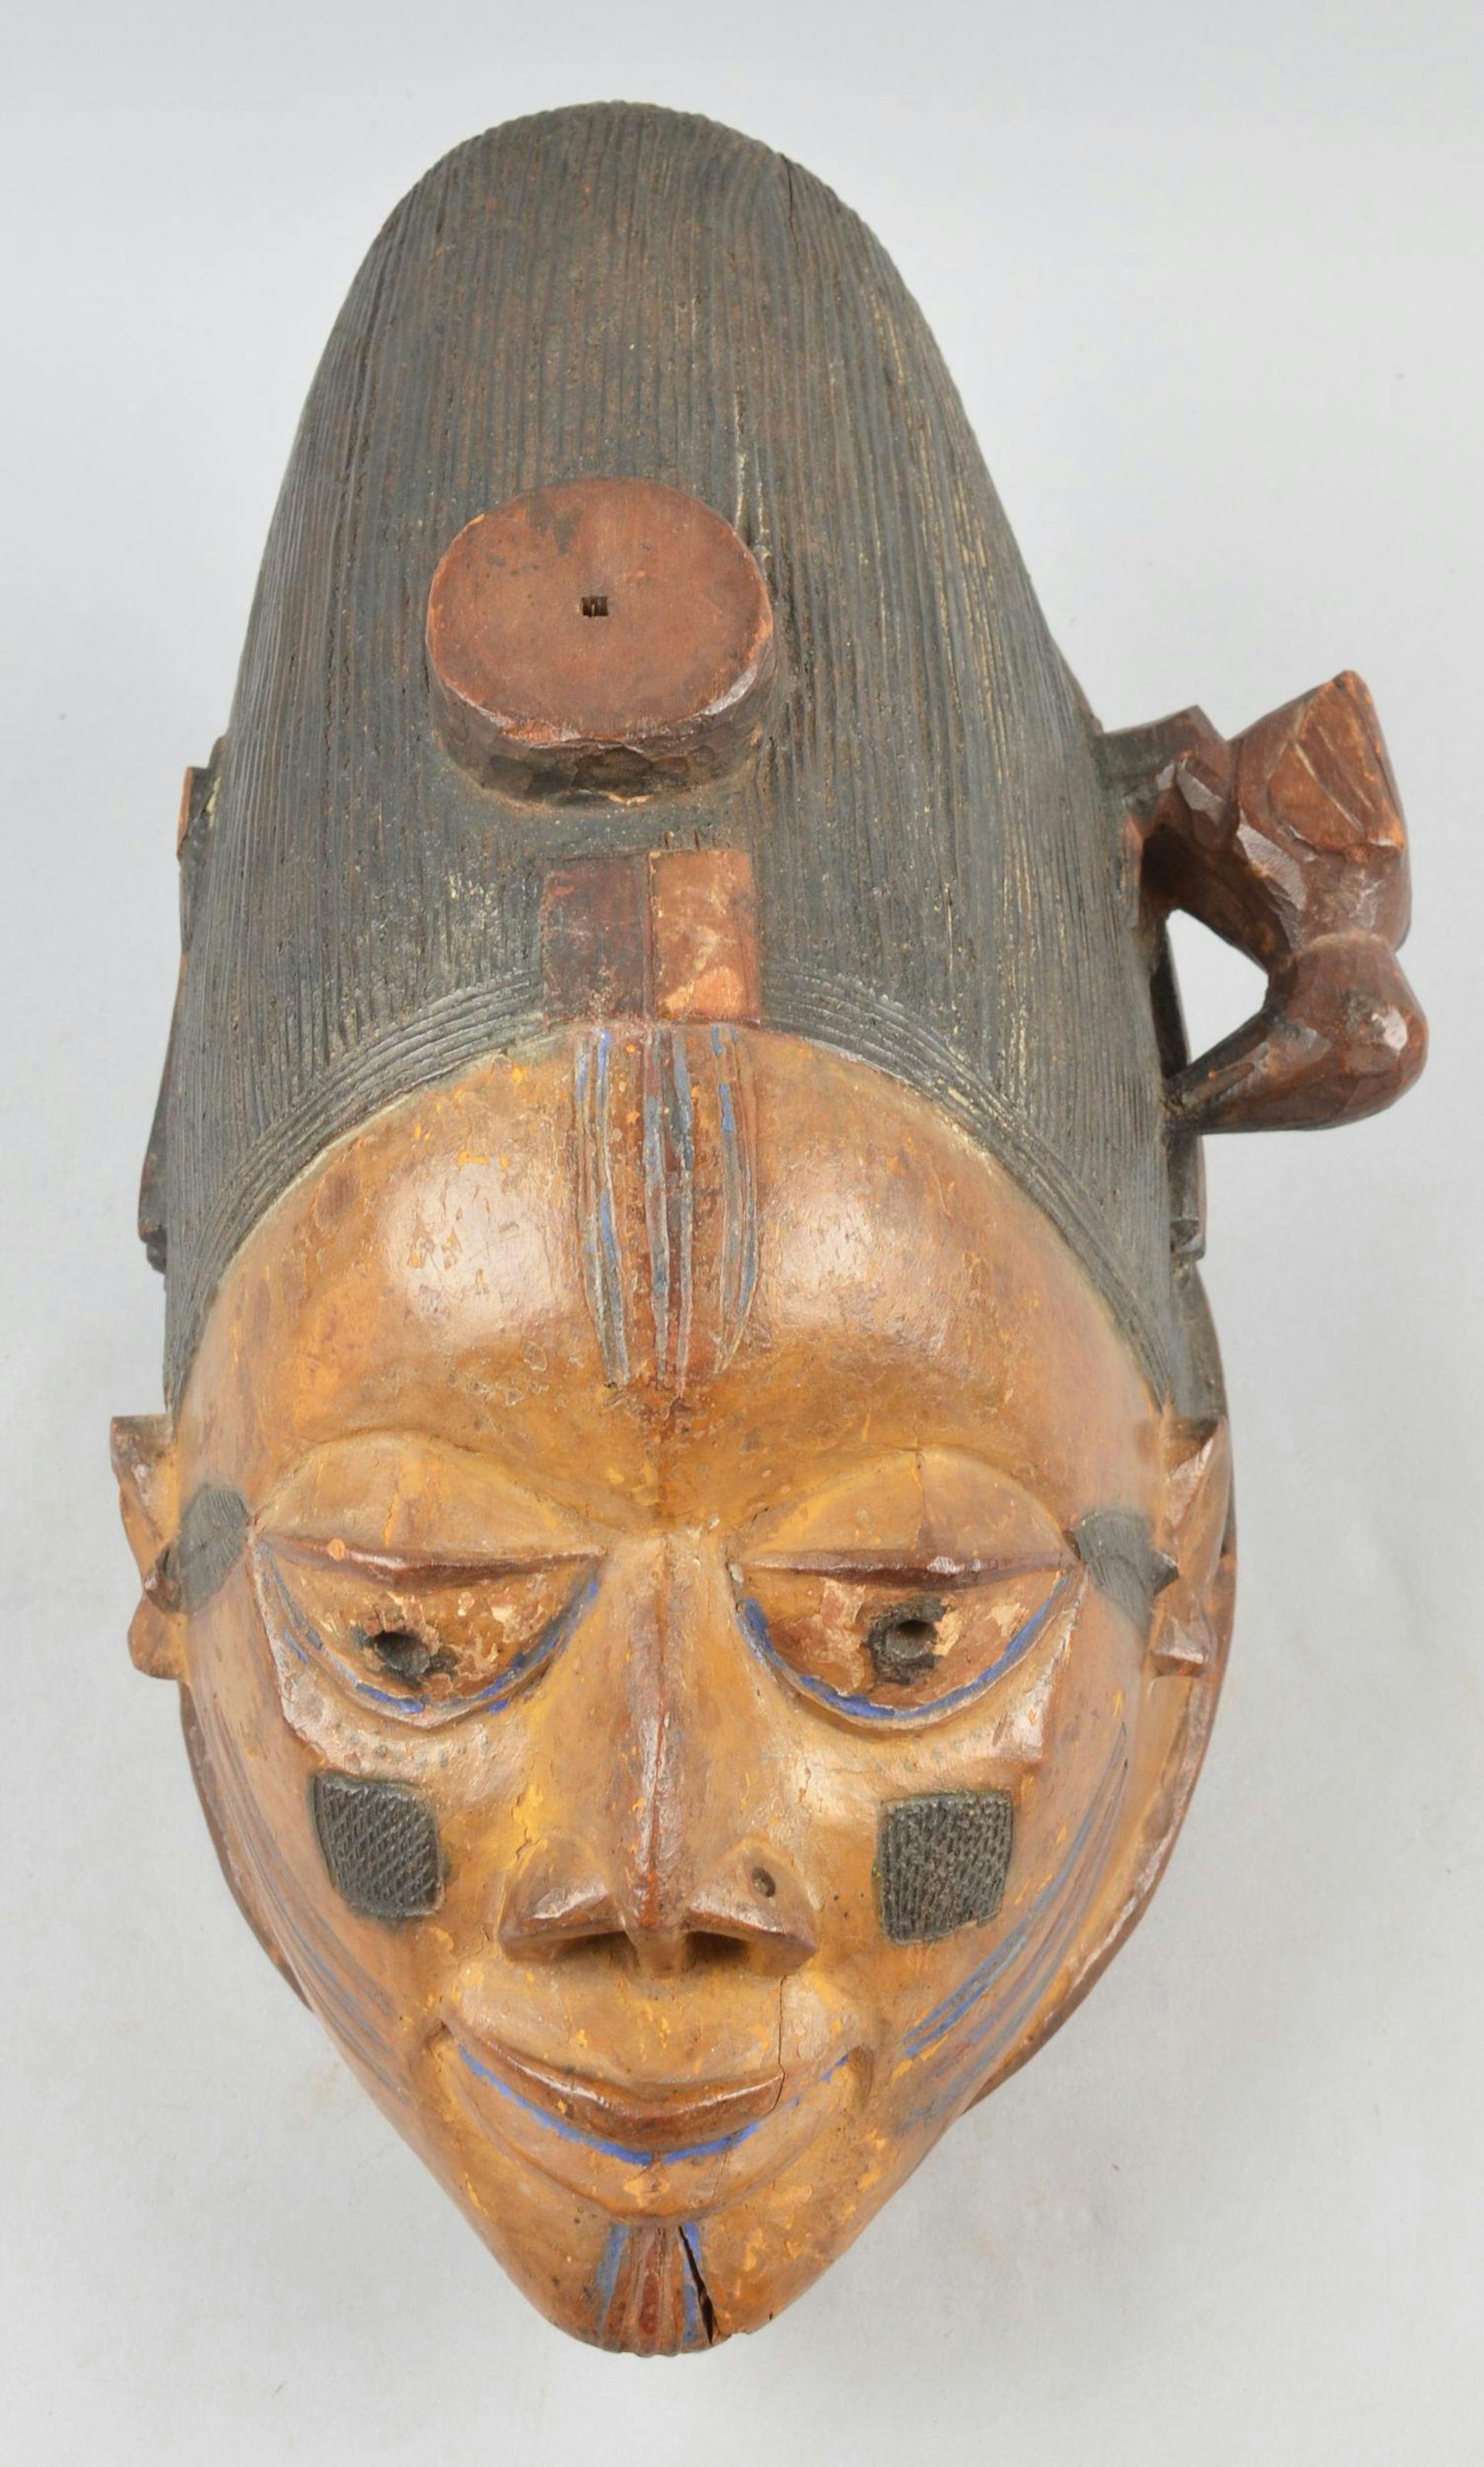 Wooden dance mask by Yoruba artist (pre-1908).